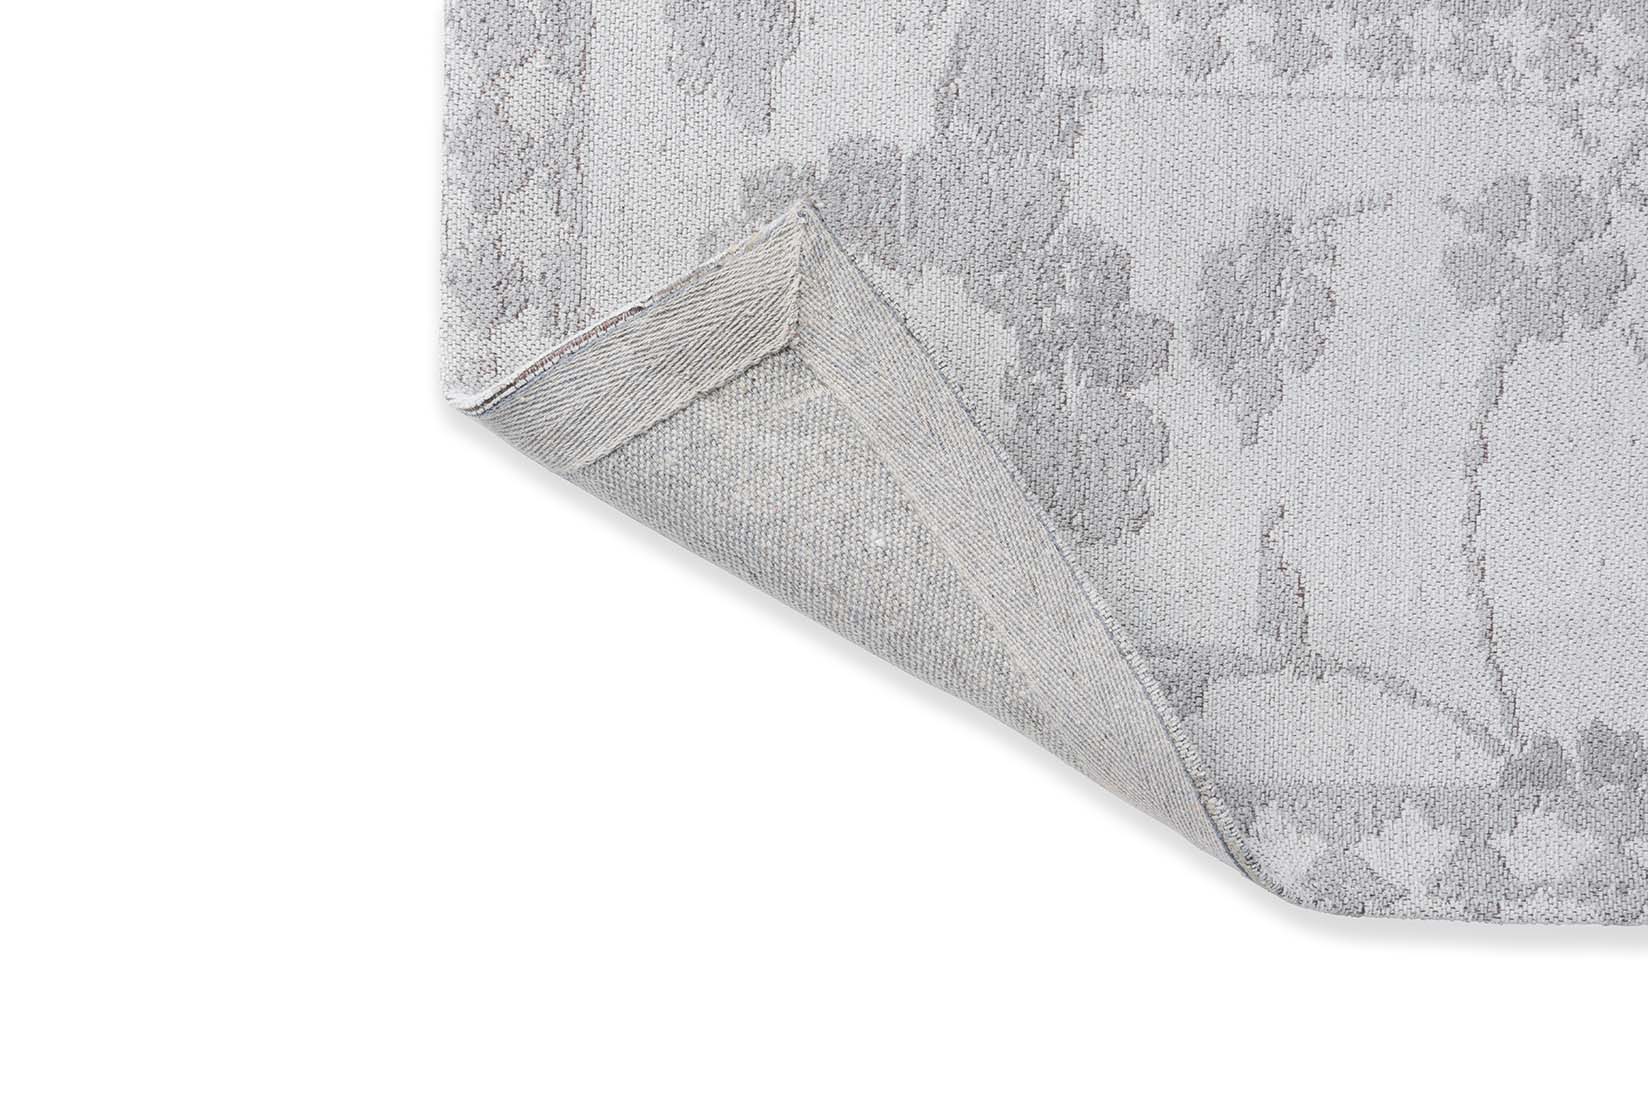 Vintage floral style cotton grey rug
